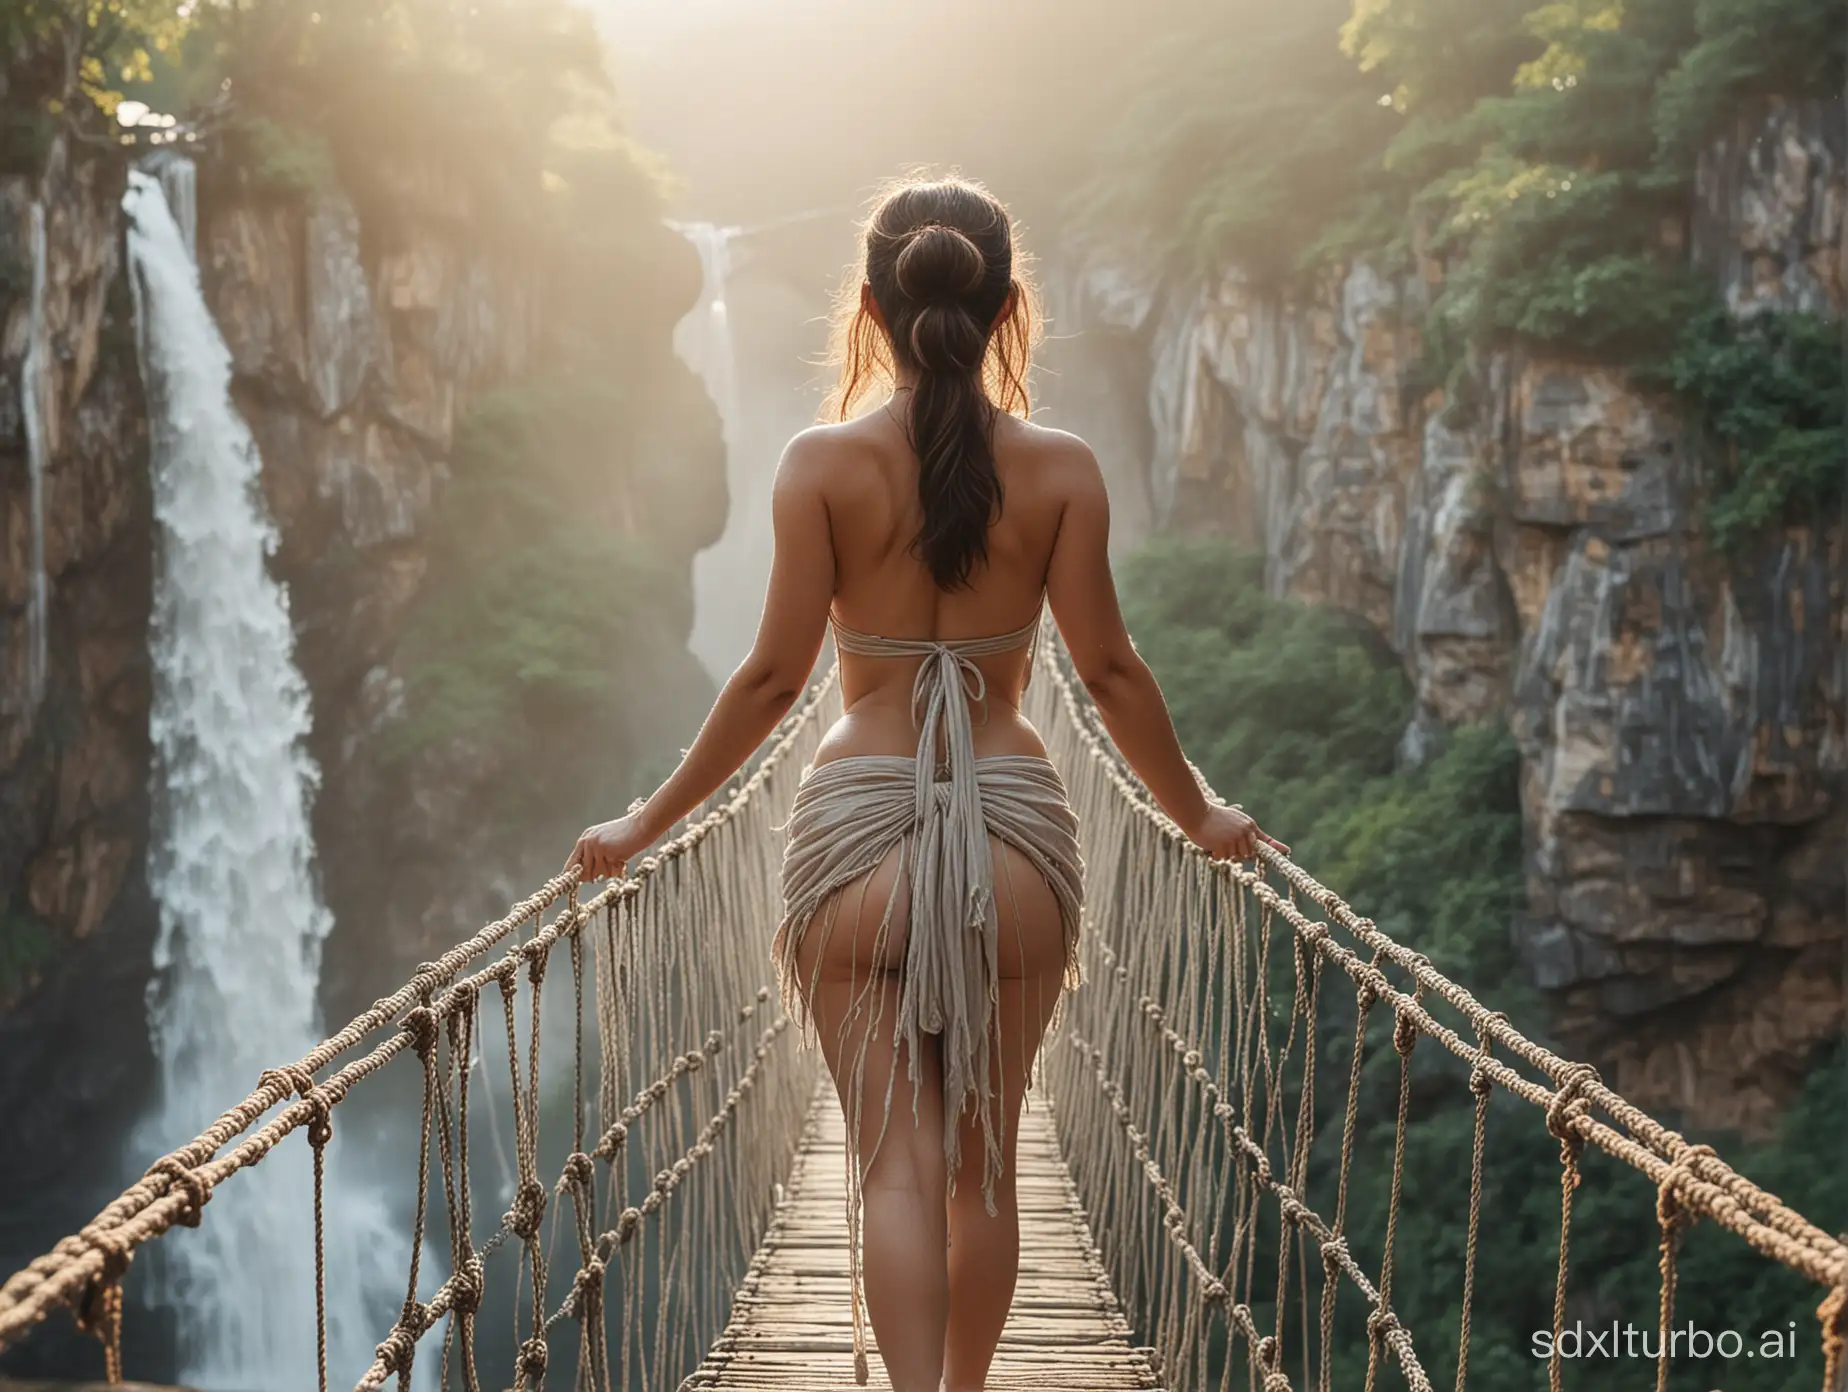 Filipina-Lady-Walking-on-Ancient-Rope-Bridge-Over-Waterfalls-at-Sunrise